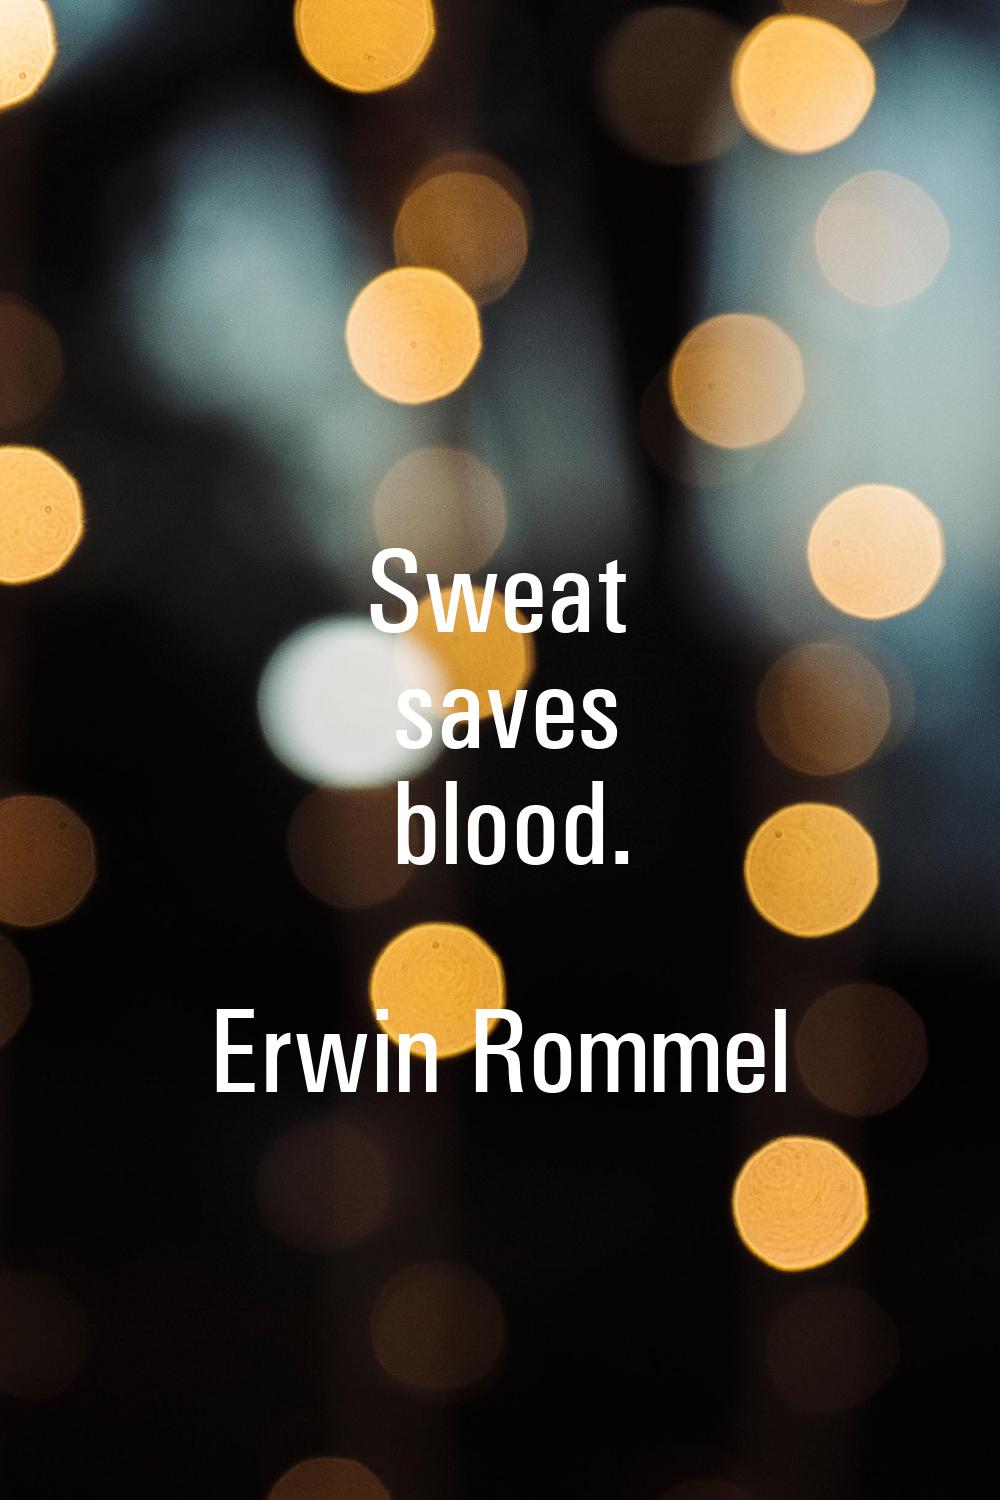 Sweat saves blood.